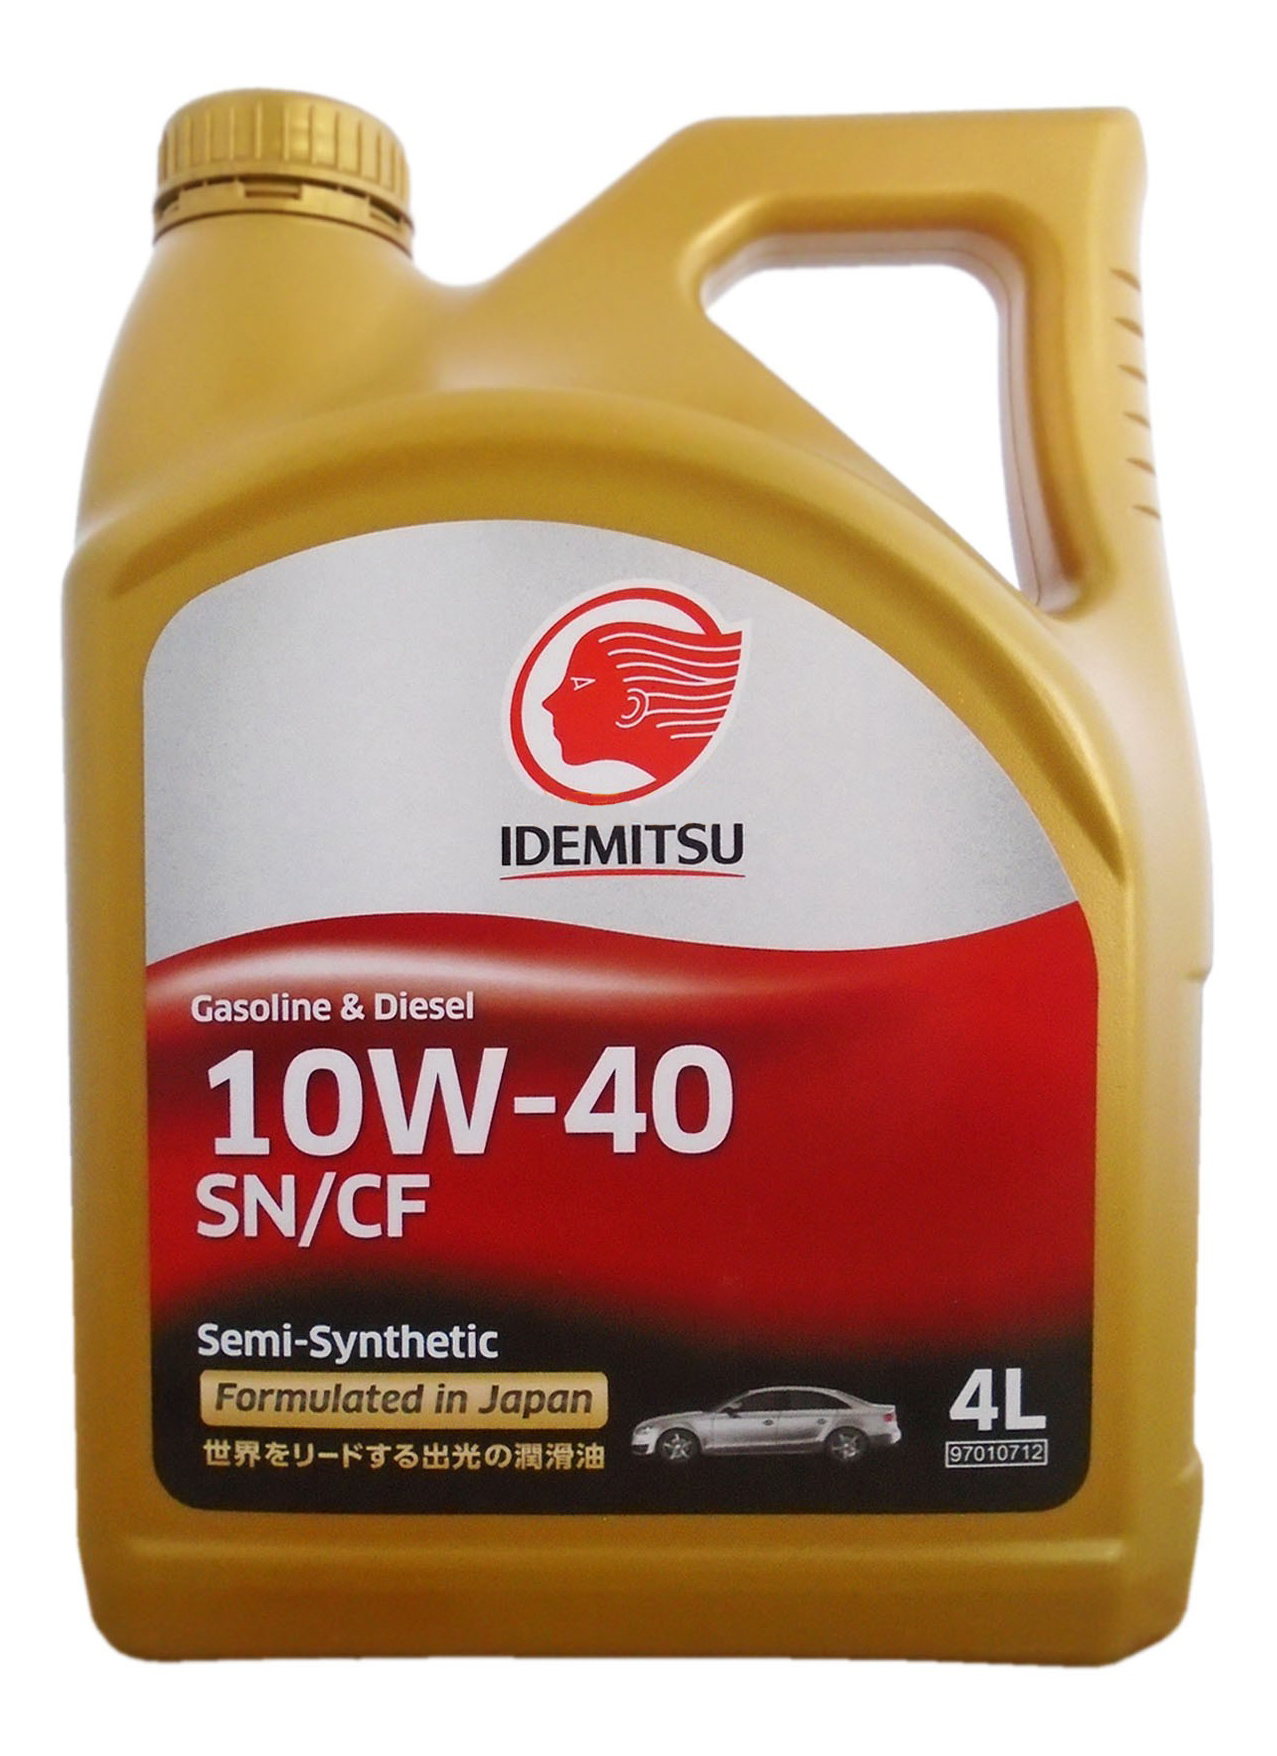 фото Idemitsu масло idemitsu 10/40 gasoline & diesel s-s sn/cf пластик 4л